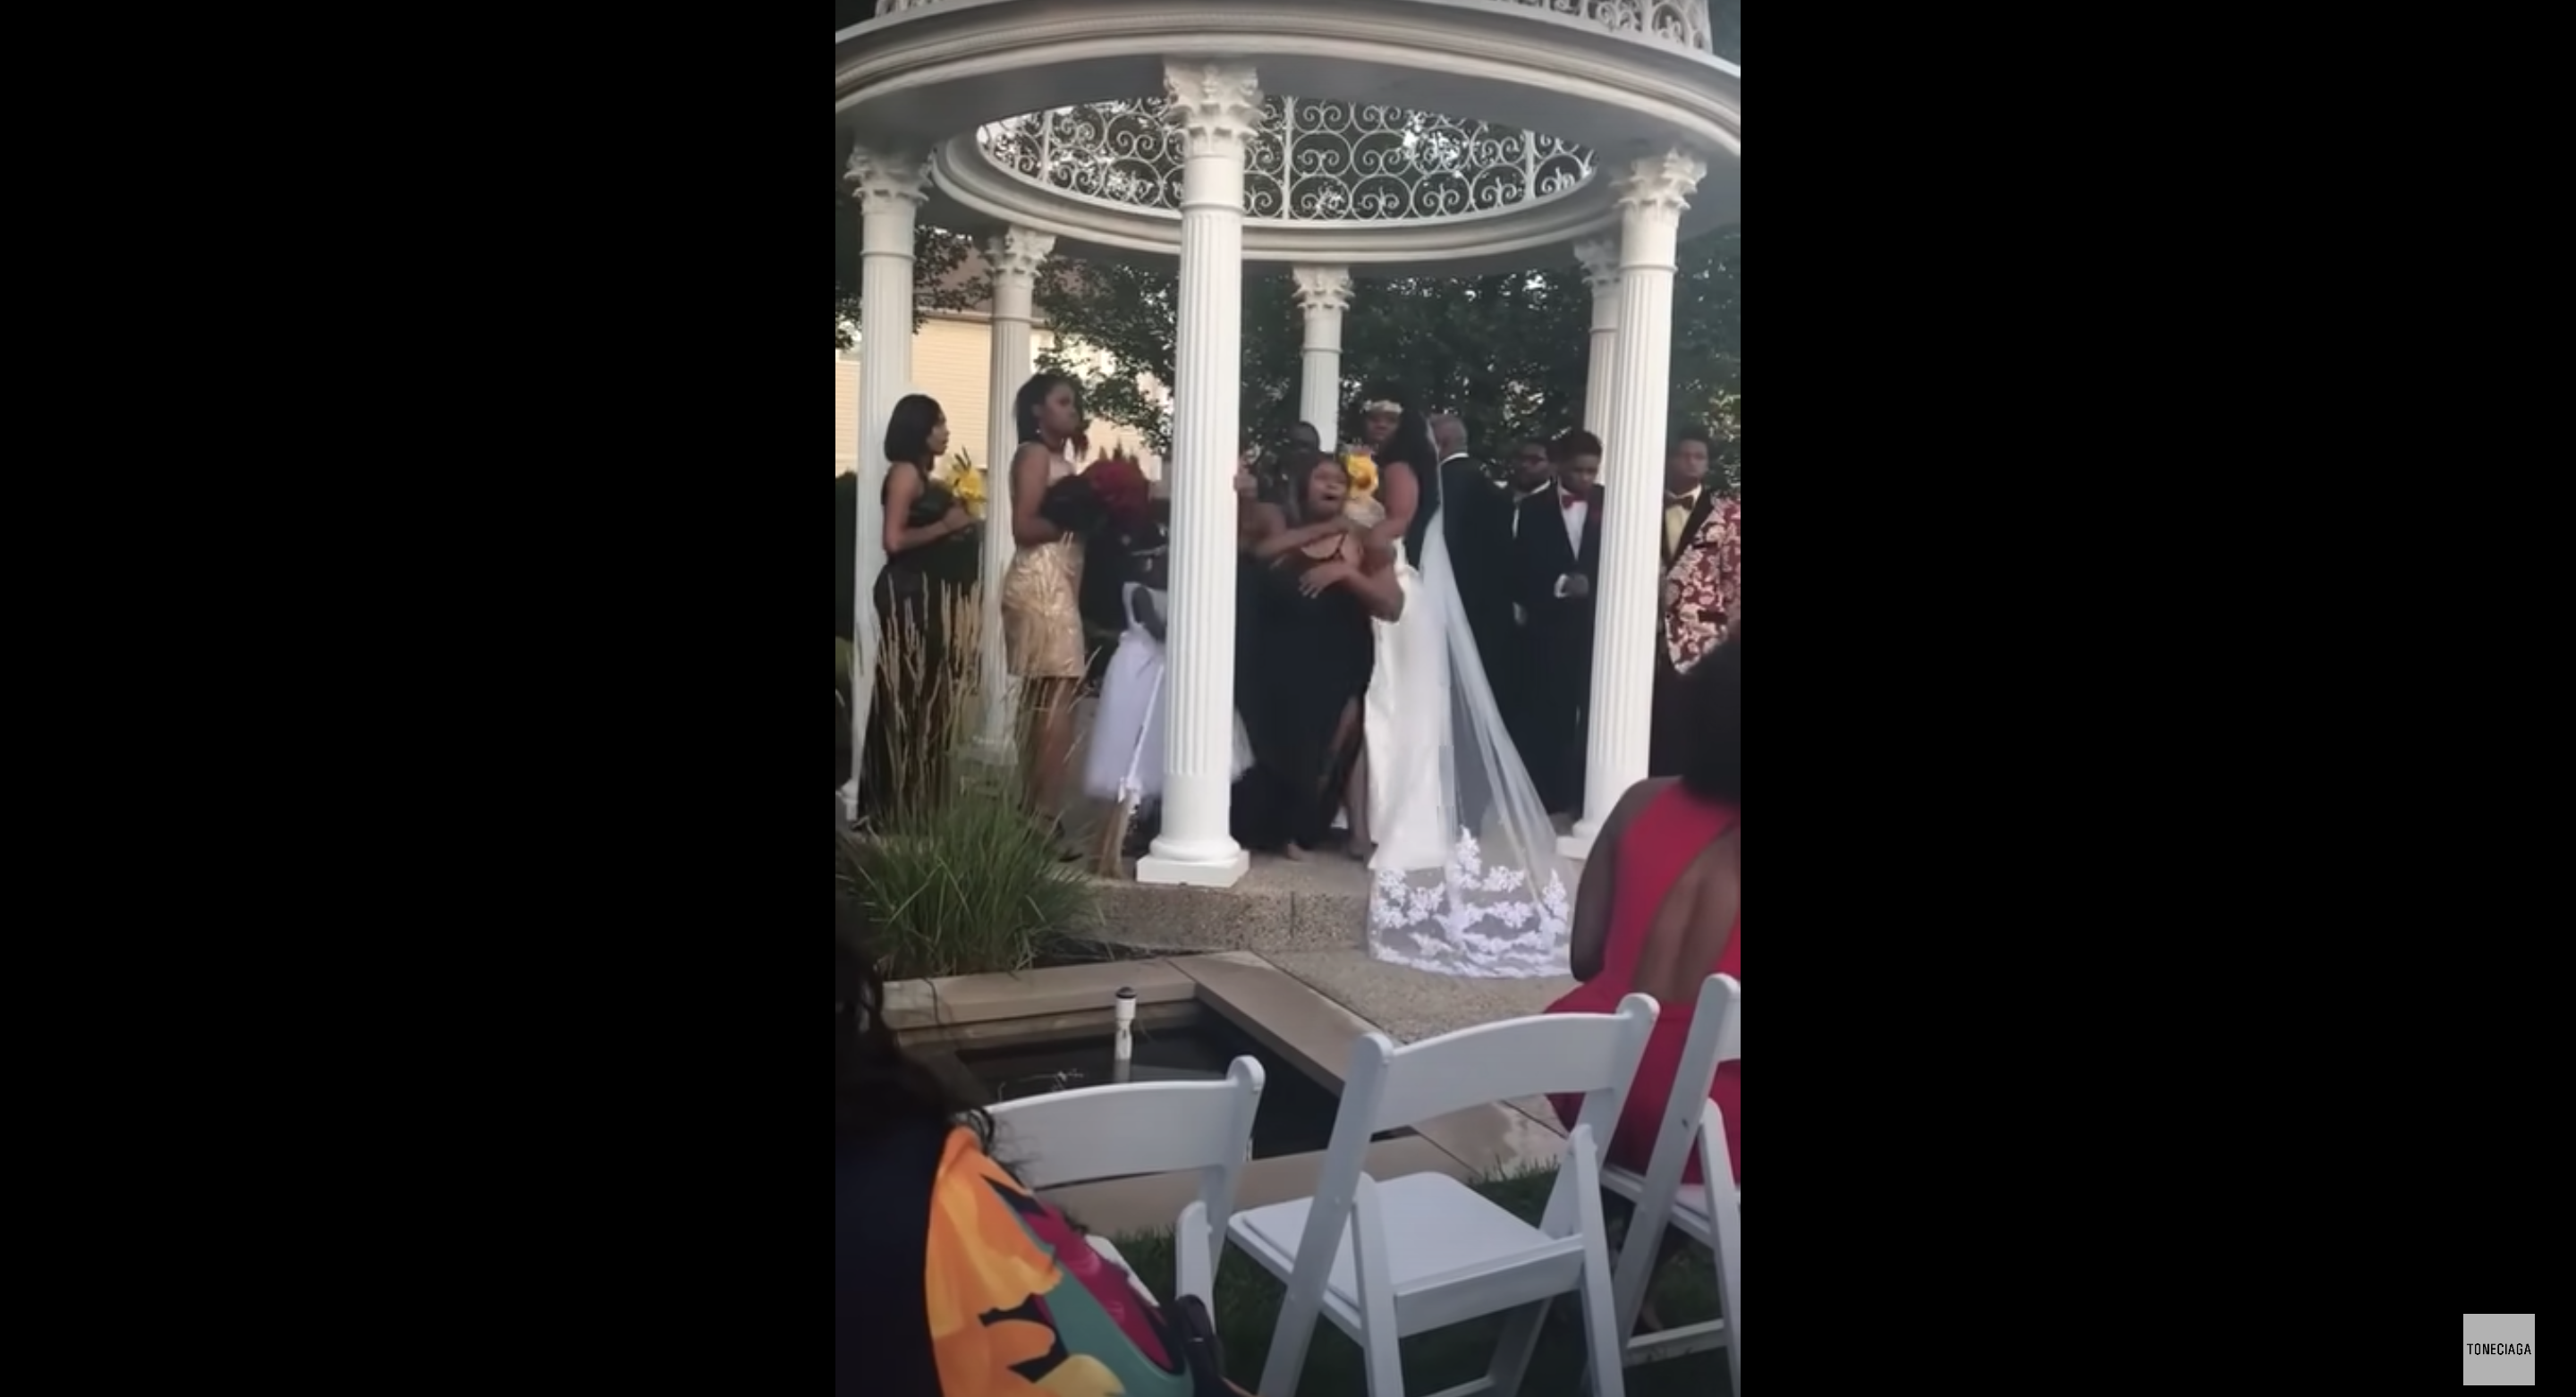 La hija de la novia interviene. | Foto: Youtube.com/Toneciaga